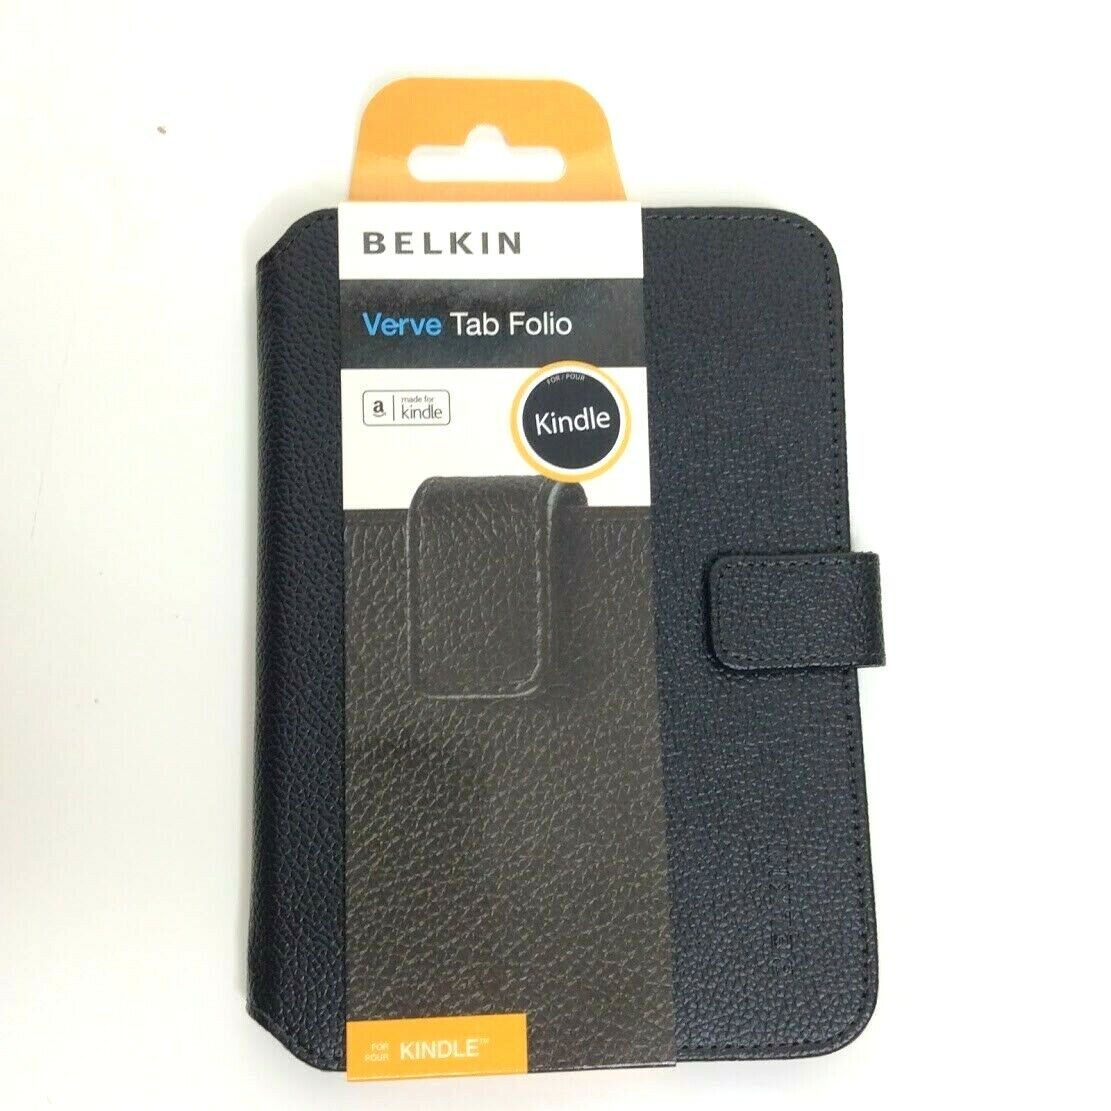 Belkin Verve Tab Folio Kindle Paper Case LOT Cover Magnetic Black 6